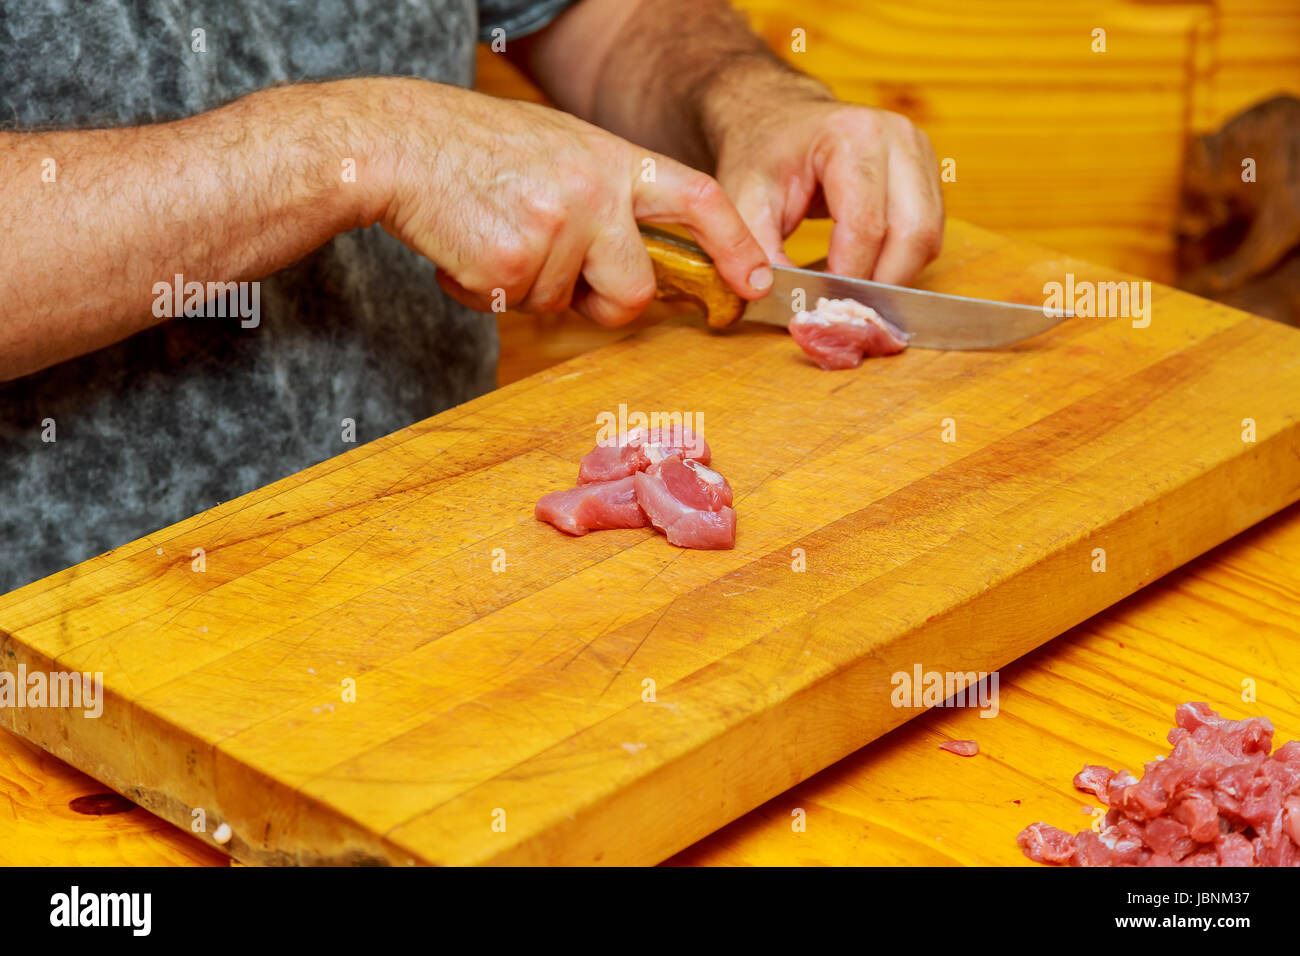 https://c8.alamy.com/comp/JBNM37/chef-cutting-raw-meat-on-the-wood-block-chef-cuts-meat-JBNM37.jpg